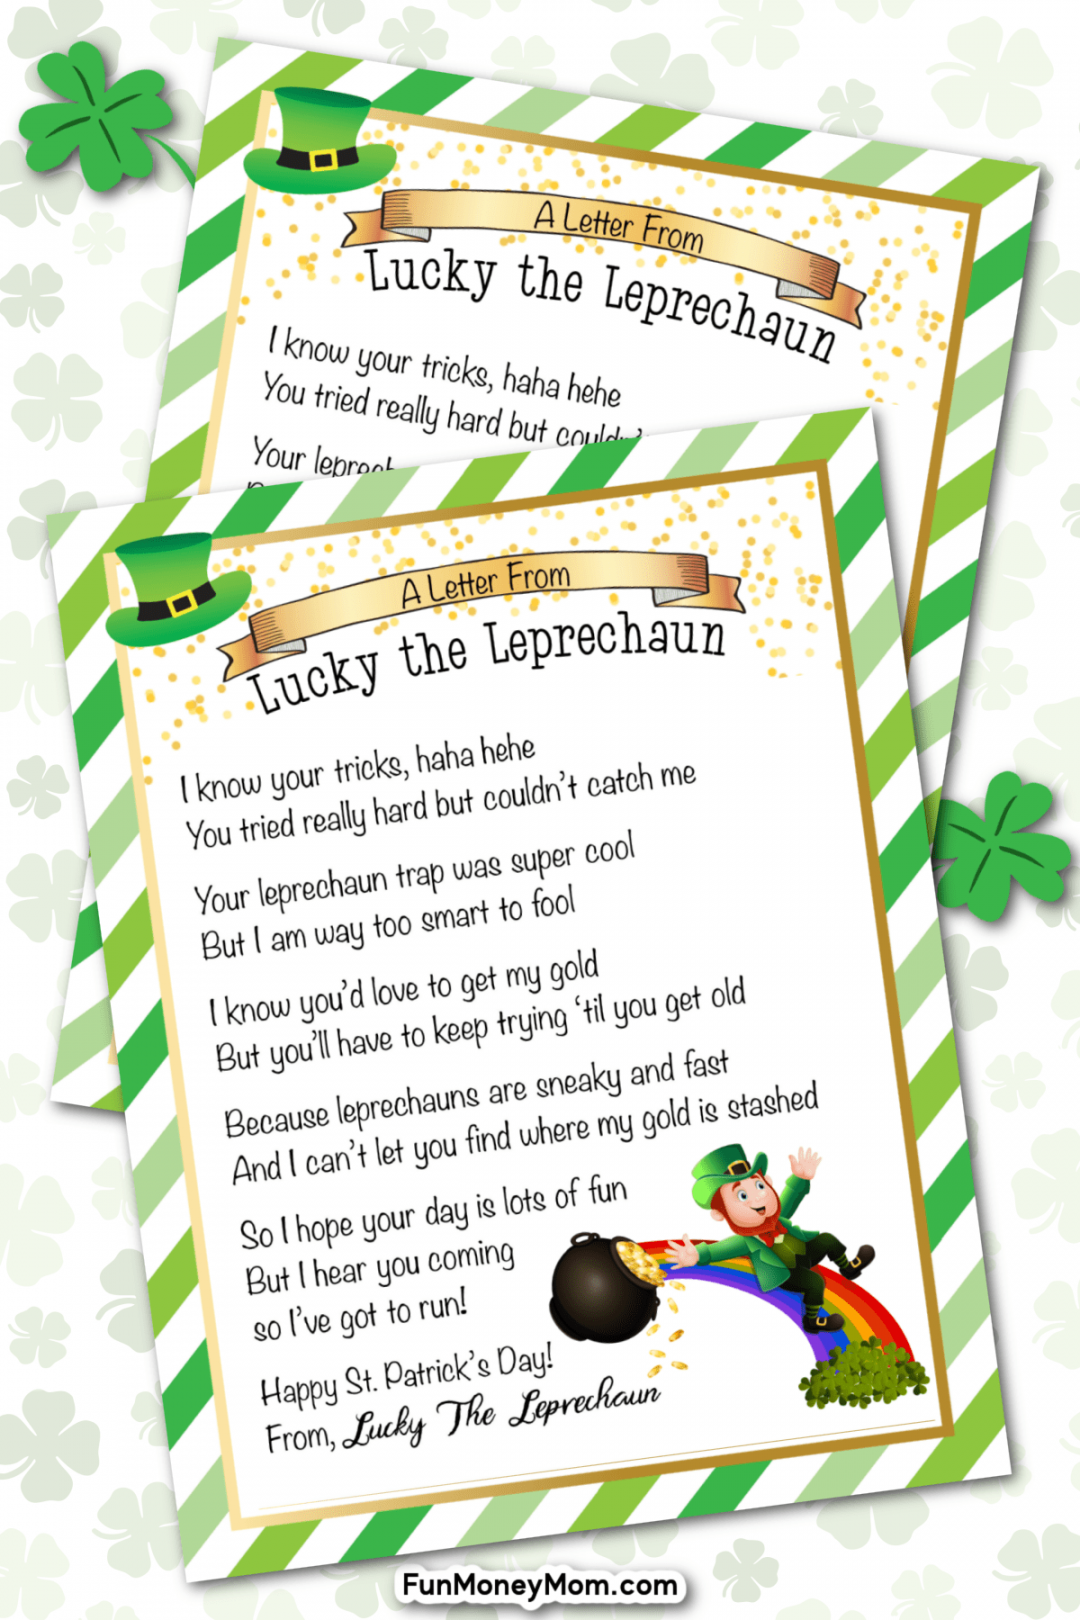 Free Printable Leprechaun Letter - Fun Money Mom - FREE Printables - Free Printable Leprechaun Trap Notes